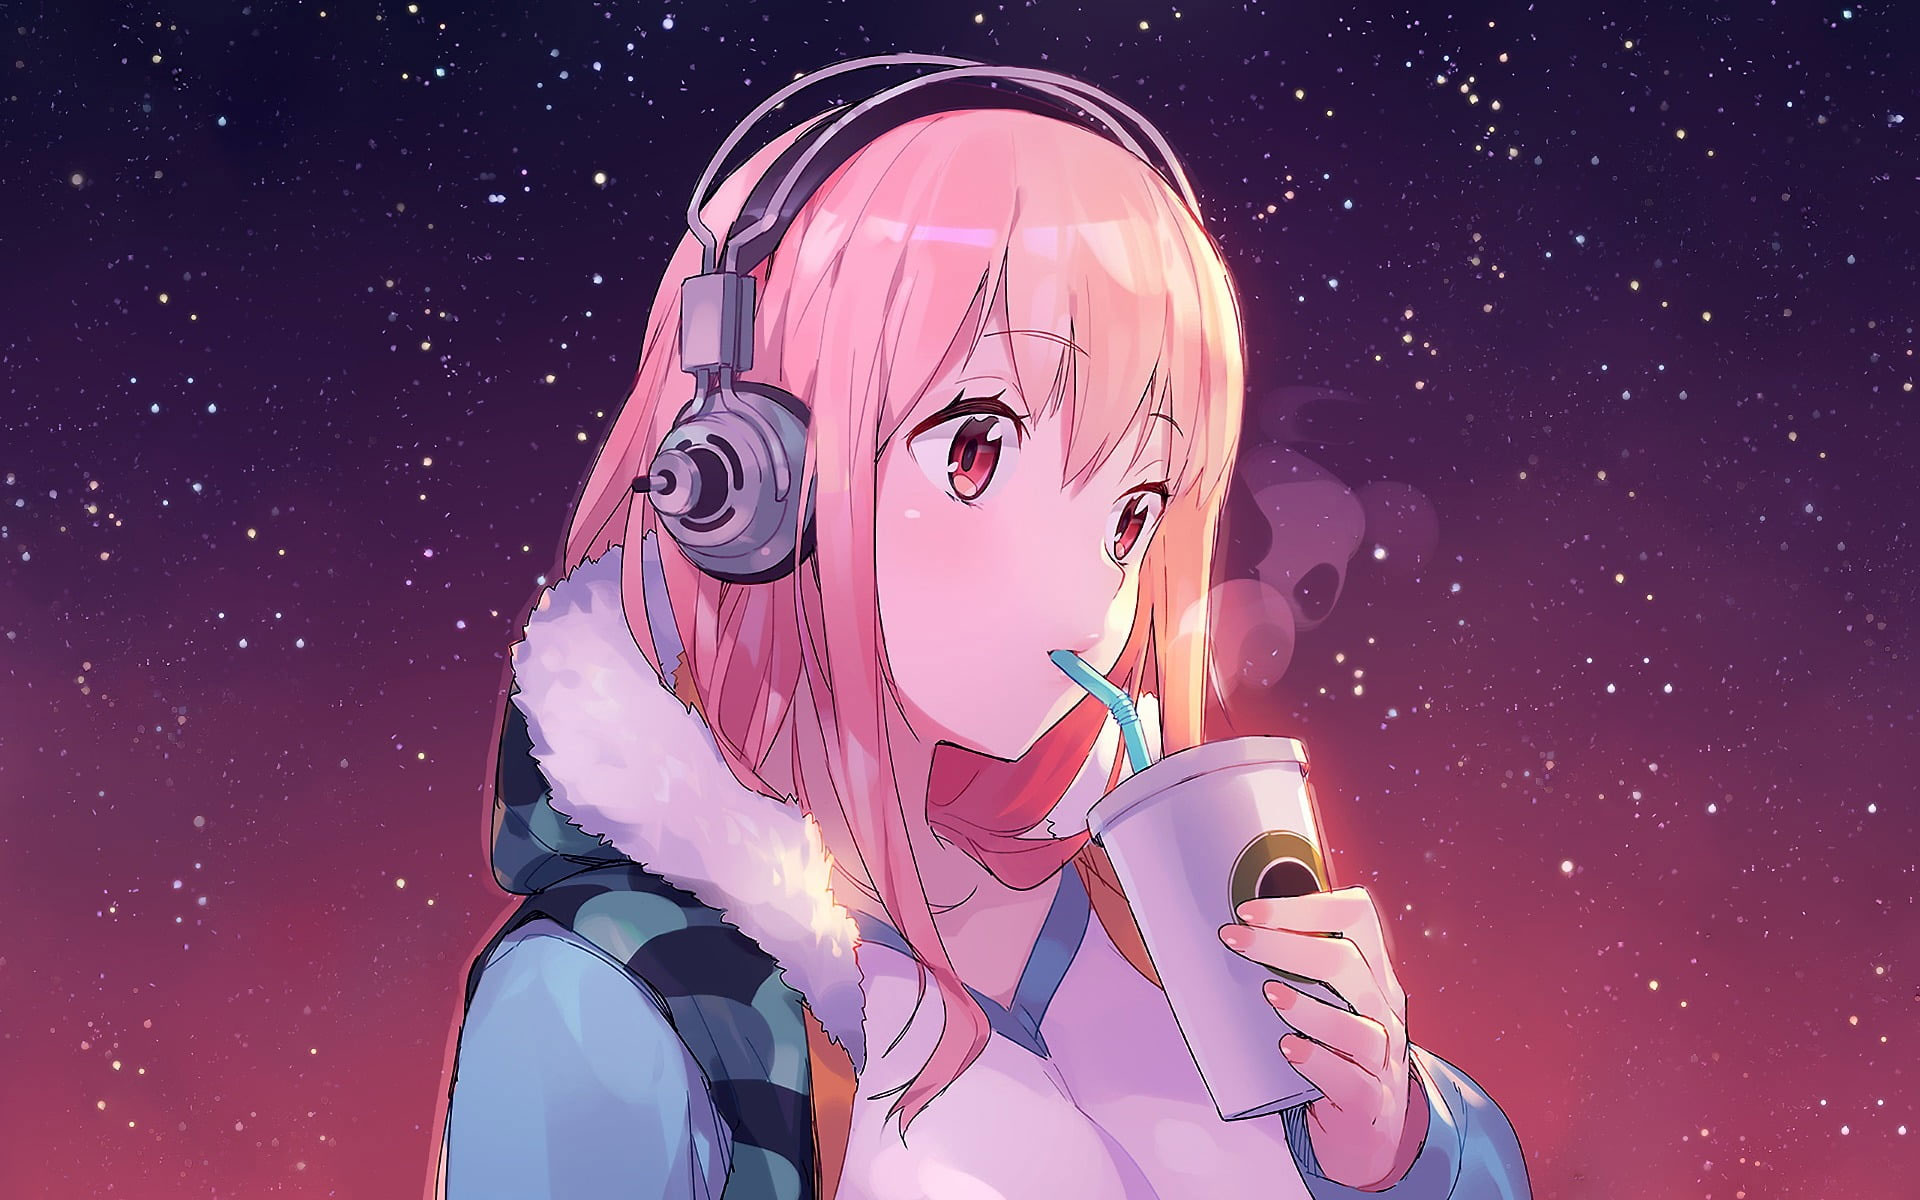 Anime girls wallpaper, Super Sonico, headphones, one person, night, headshot